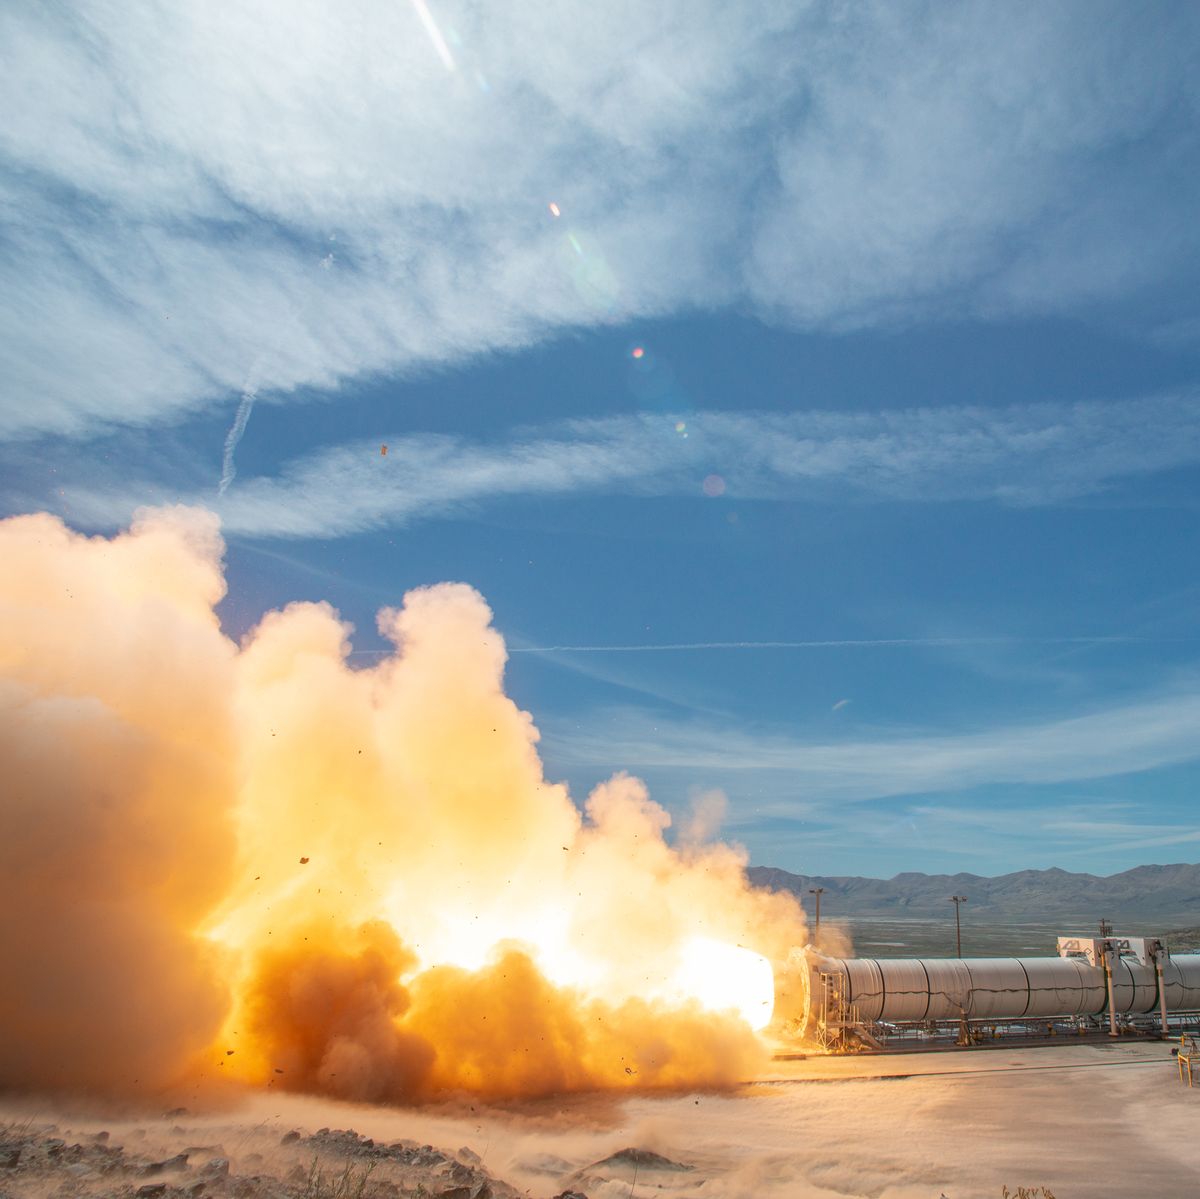 northrop grumman fsb 1 booster test for nasa’s space launch system